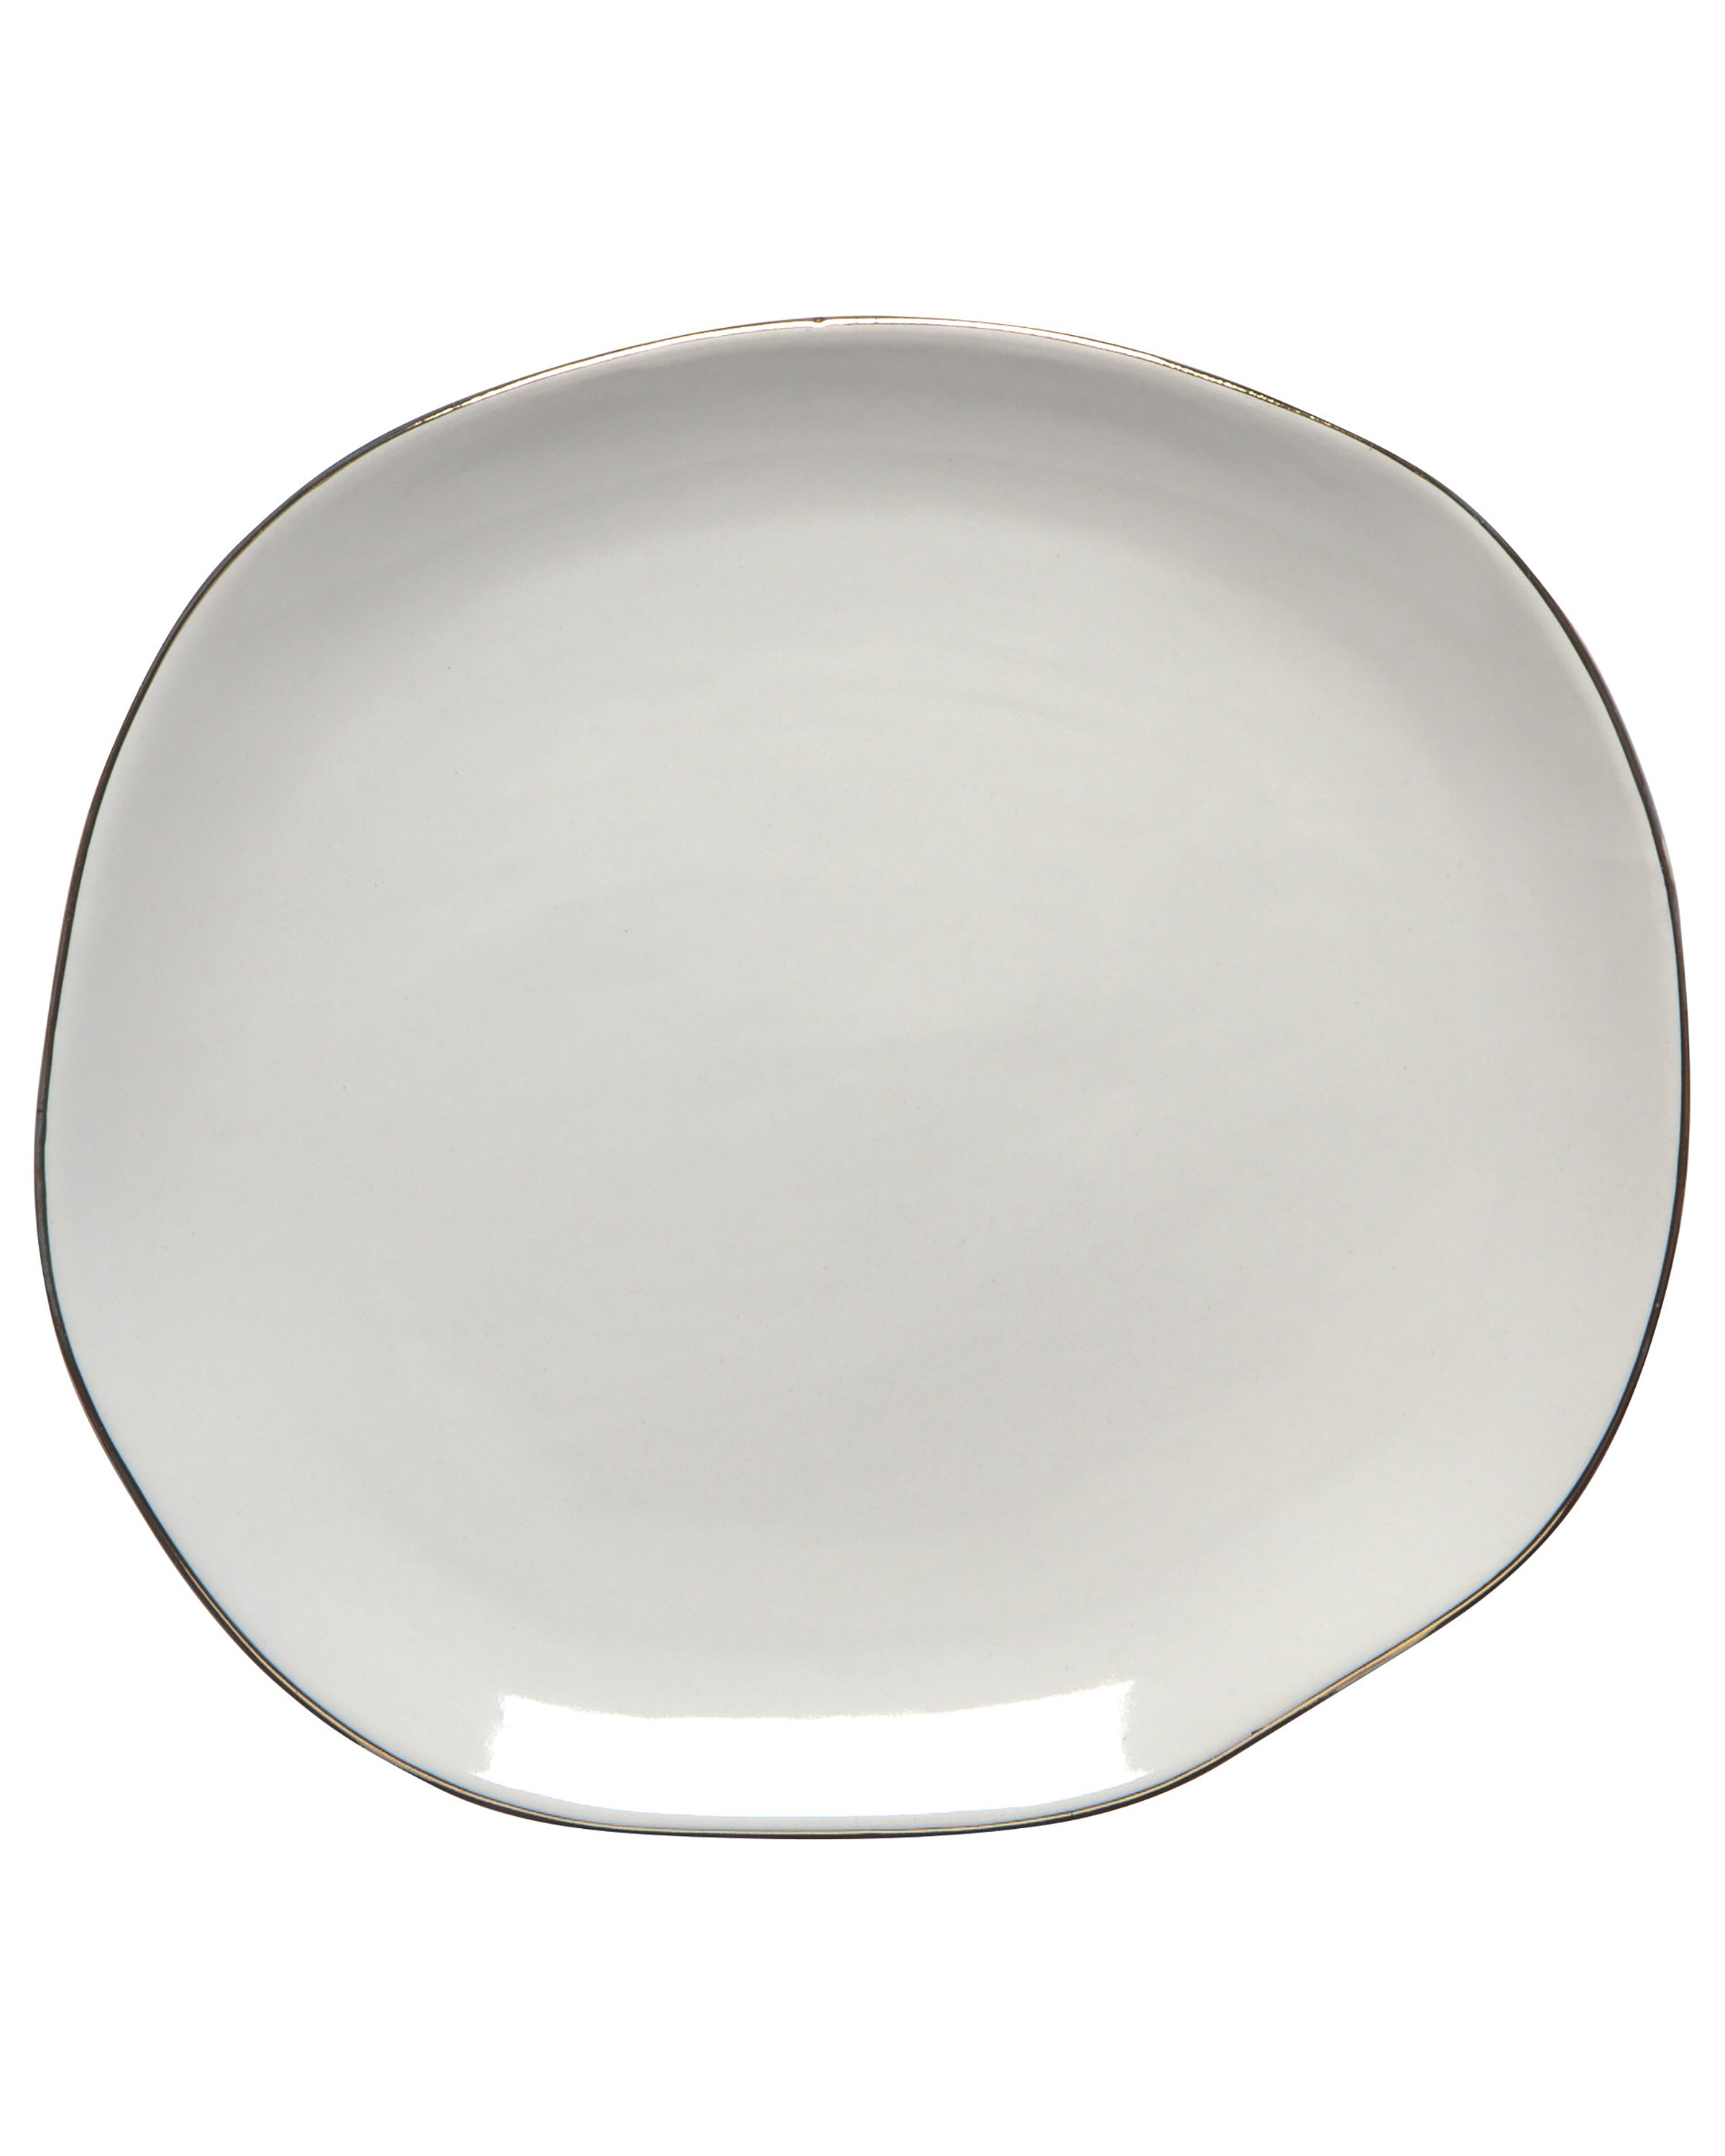 Danica Designs Flight Pebble Appetizer Plates Set of 4